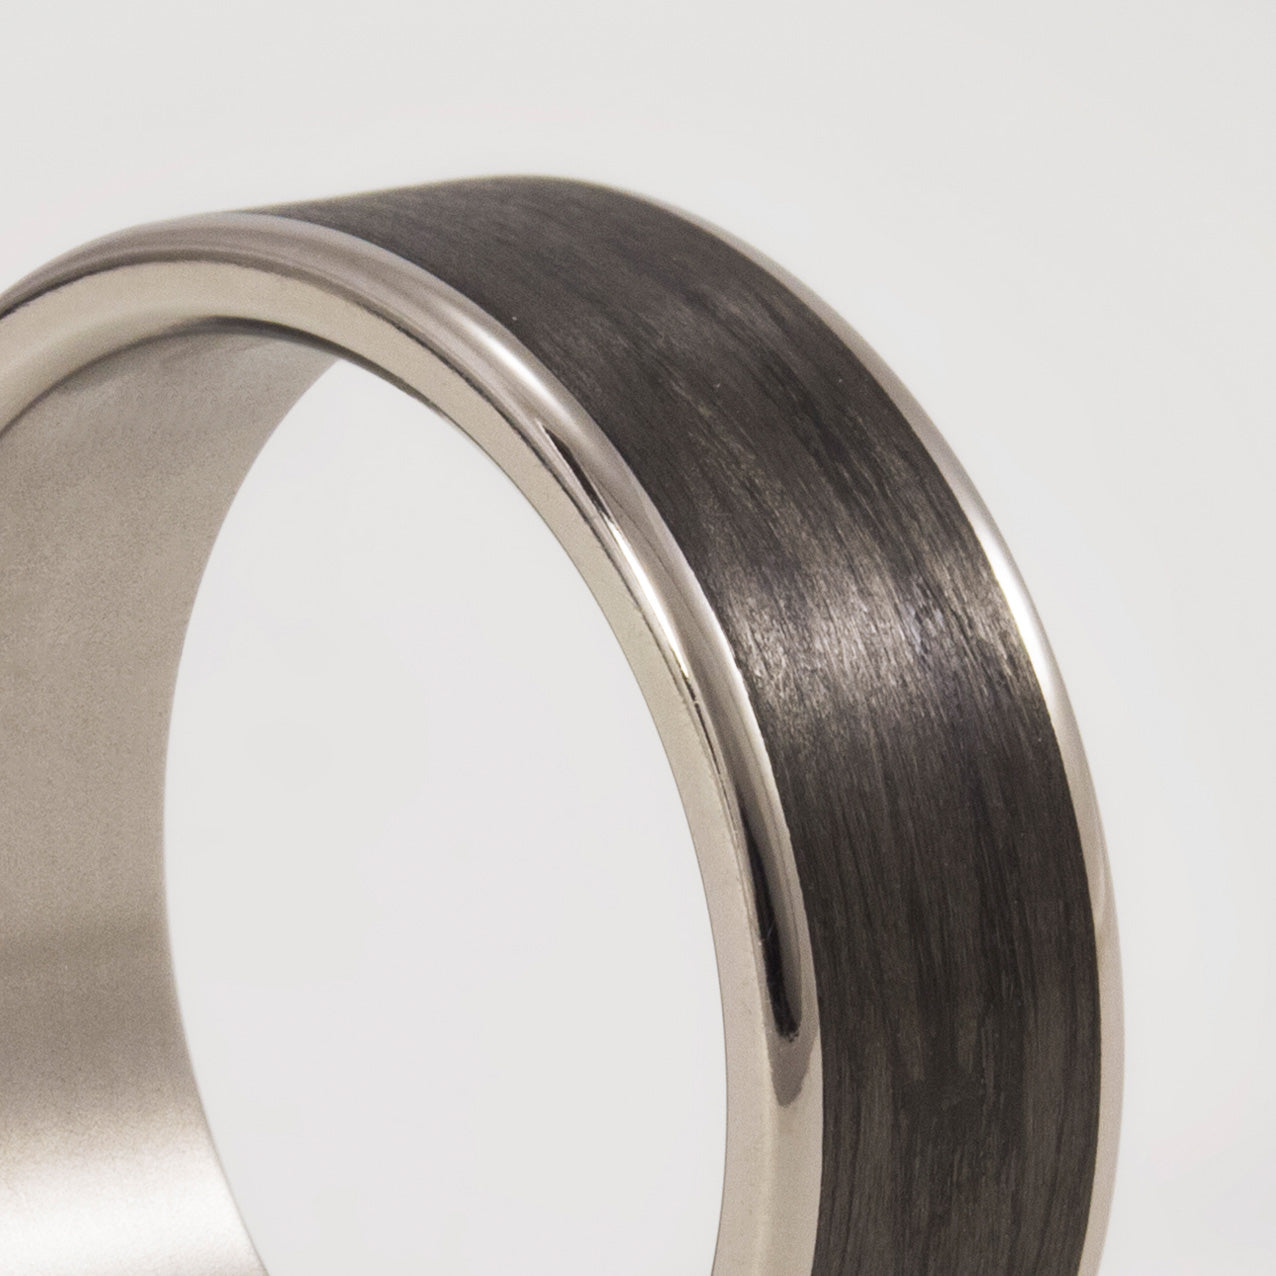 Set carbon fiber and polished titanium